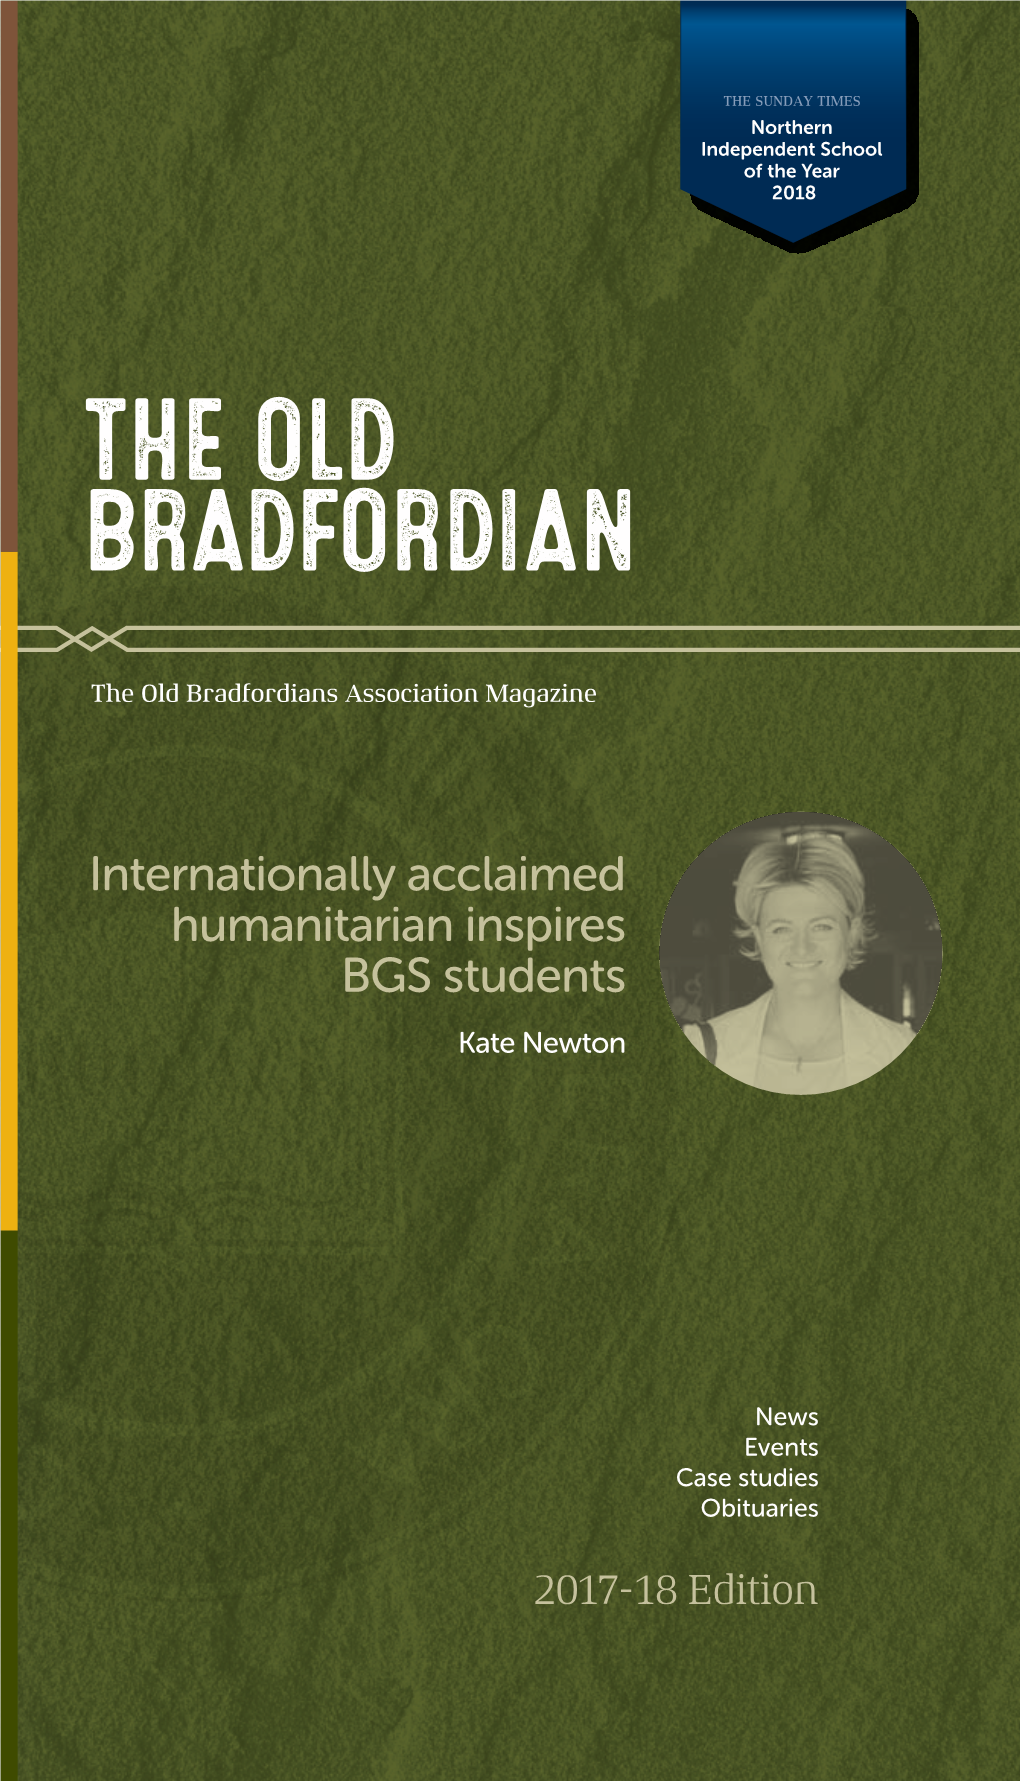 The Old Bradfordian